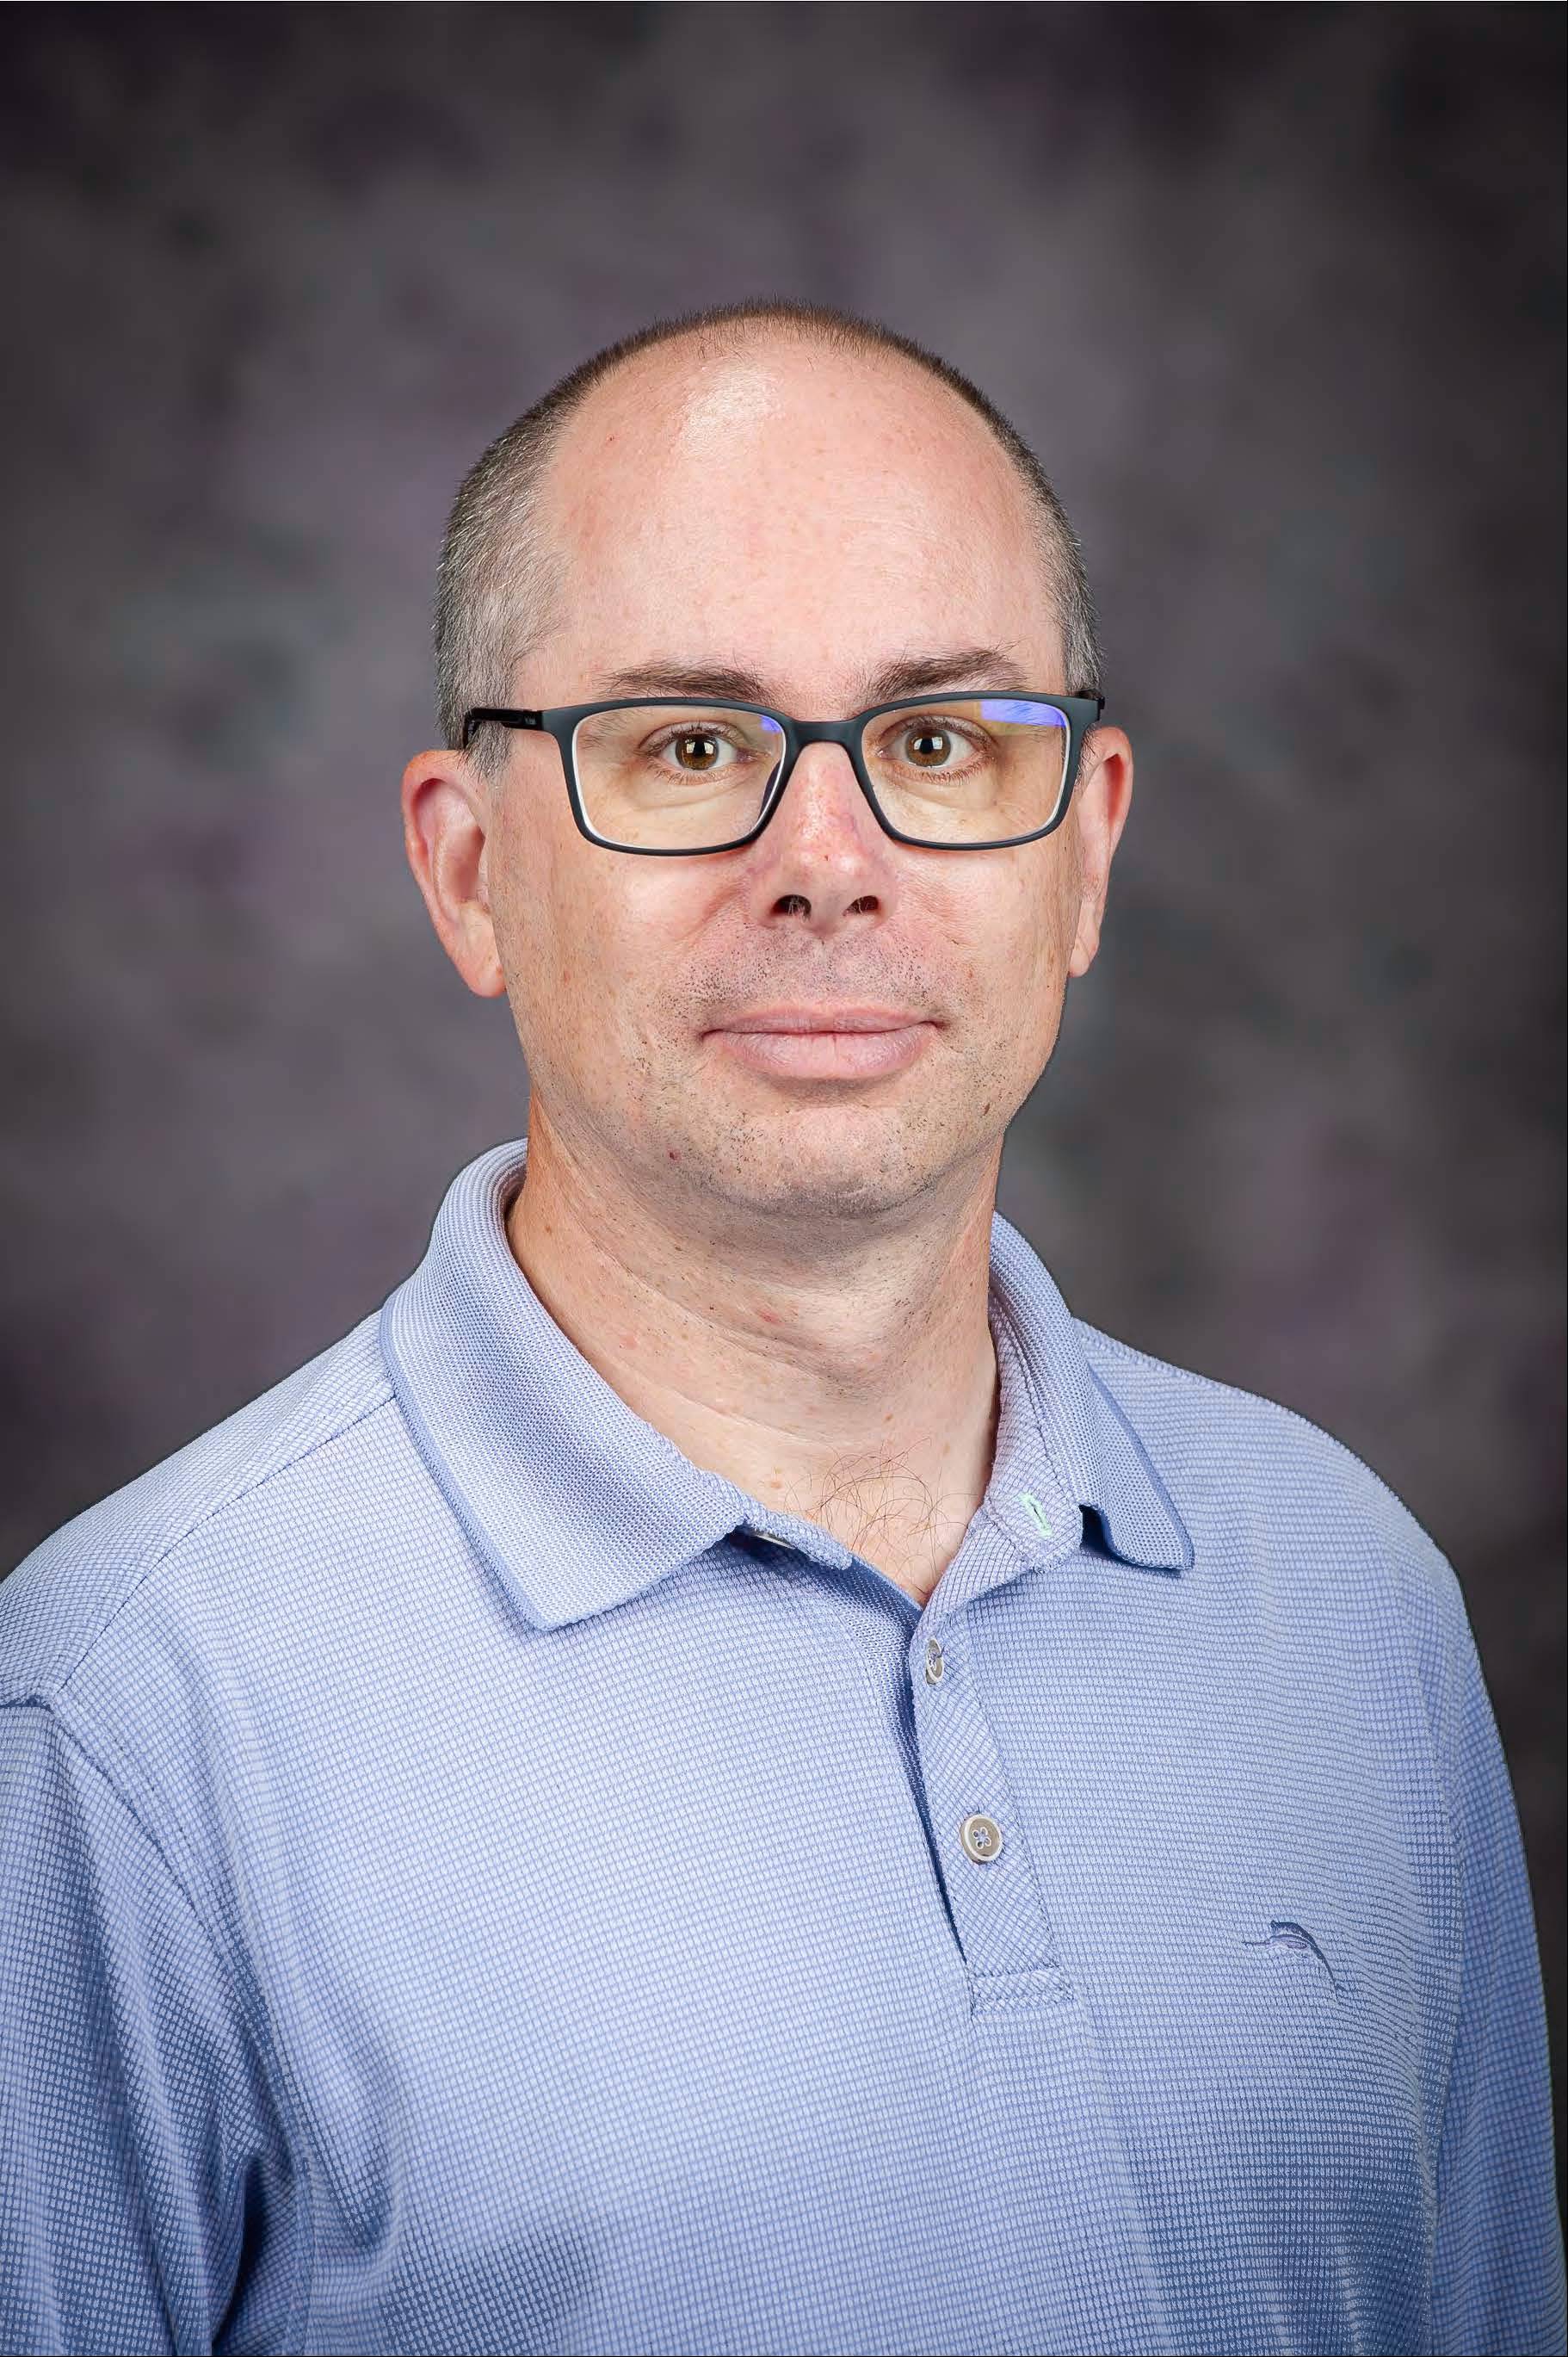 Director, Jason Maseberg-Tomlinson, Ph.D., in purple shirt and tie.